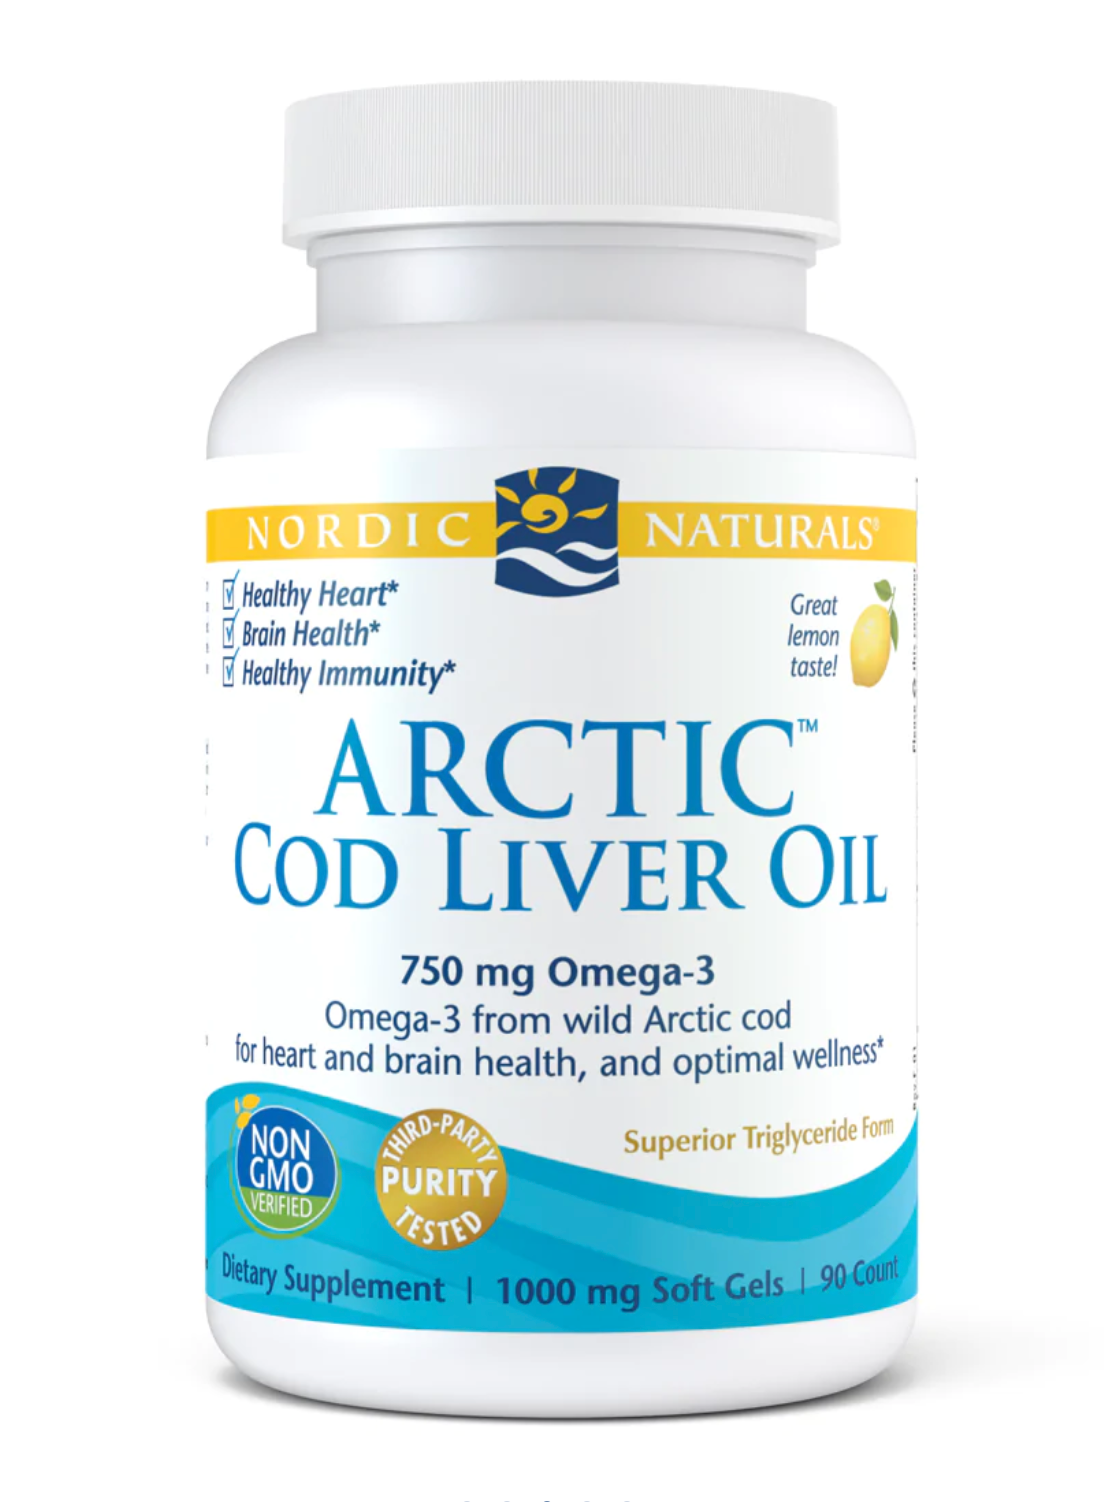 Nordic Naturals Aceite de hígado de bacalao ártico 180 cápsulas blandas 